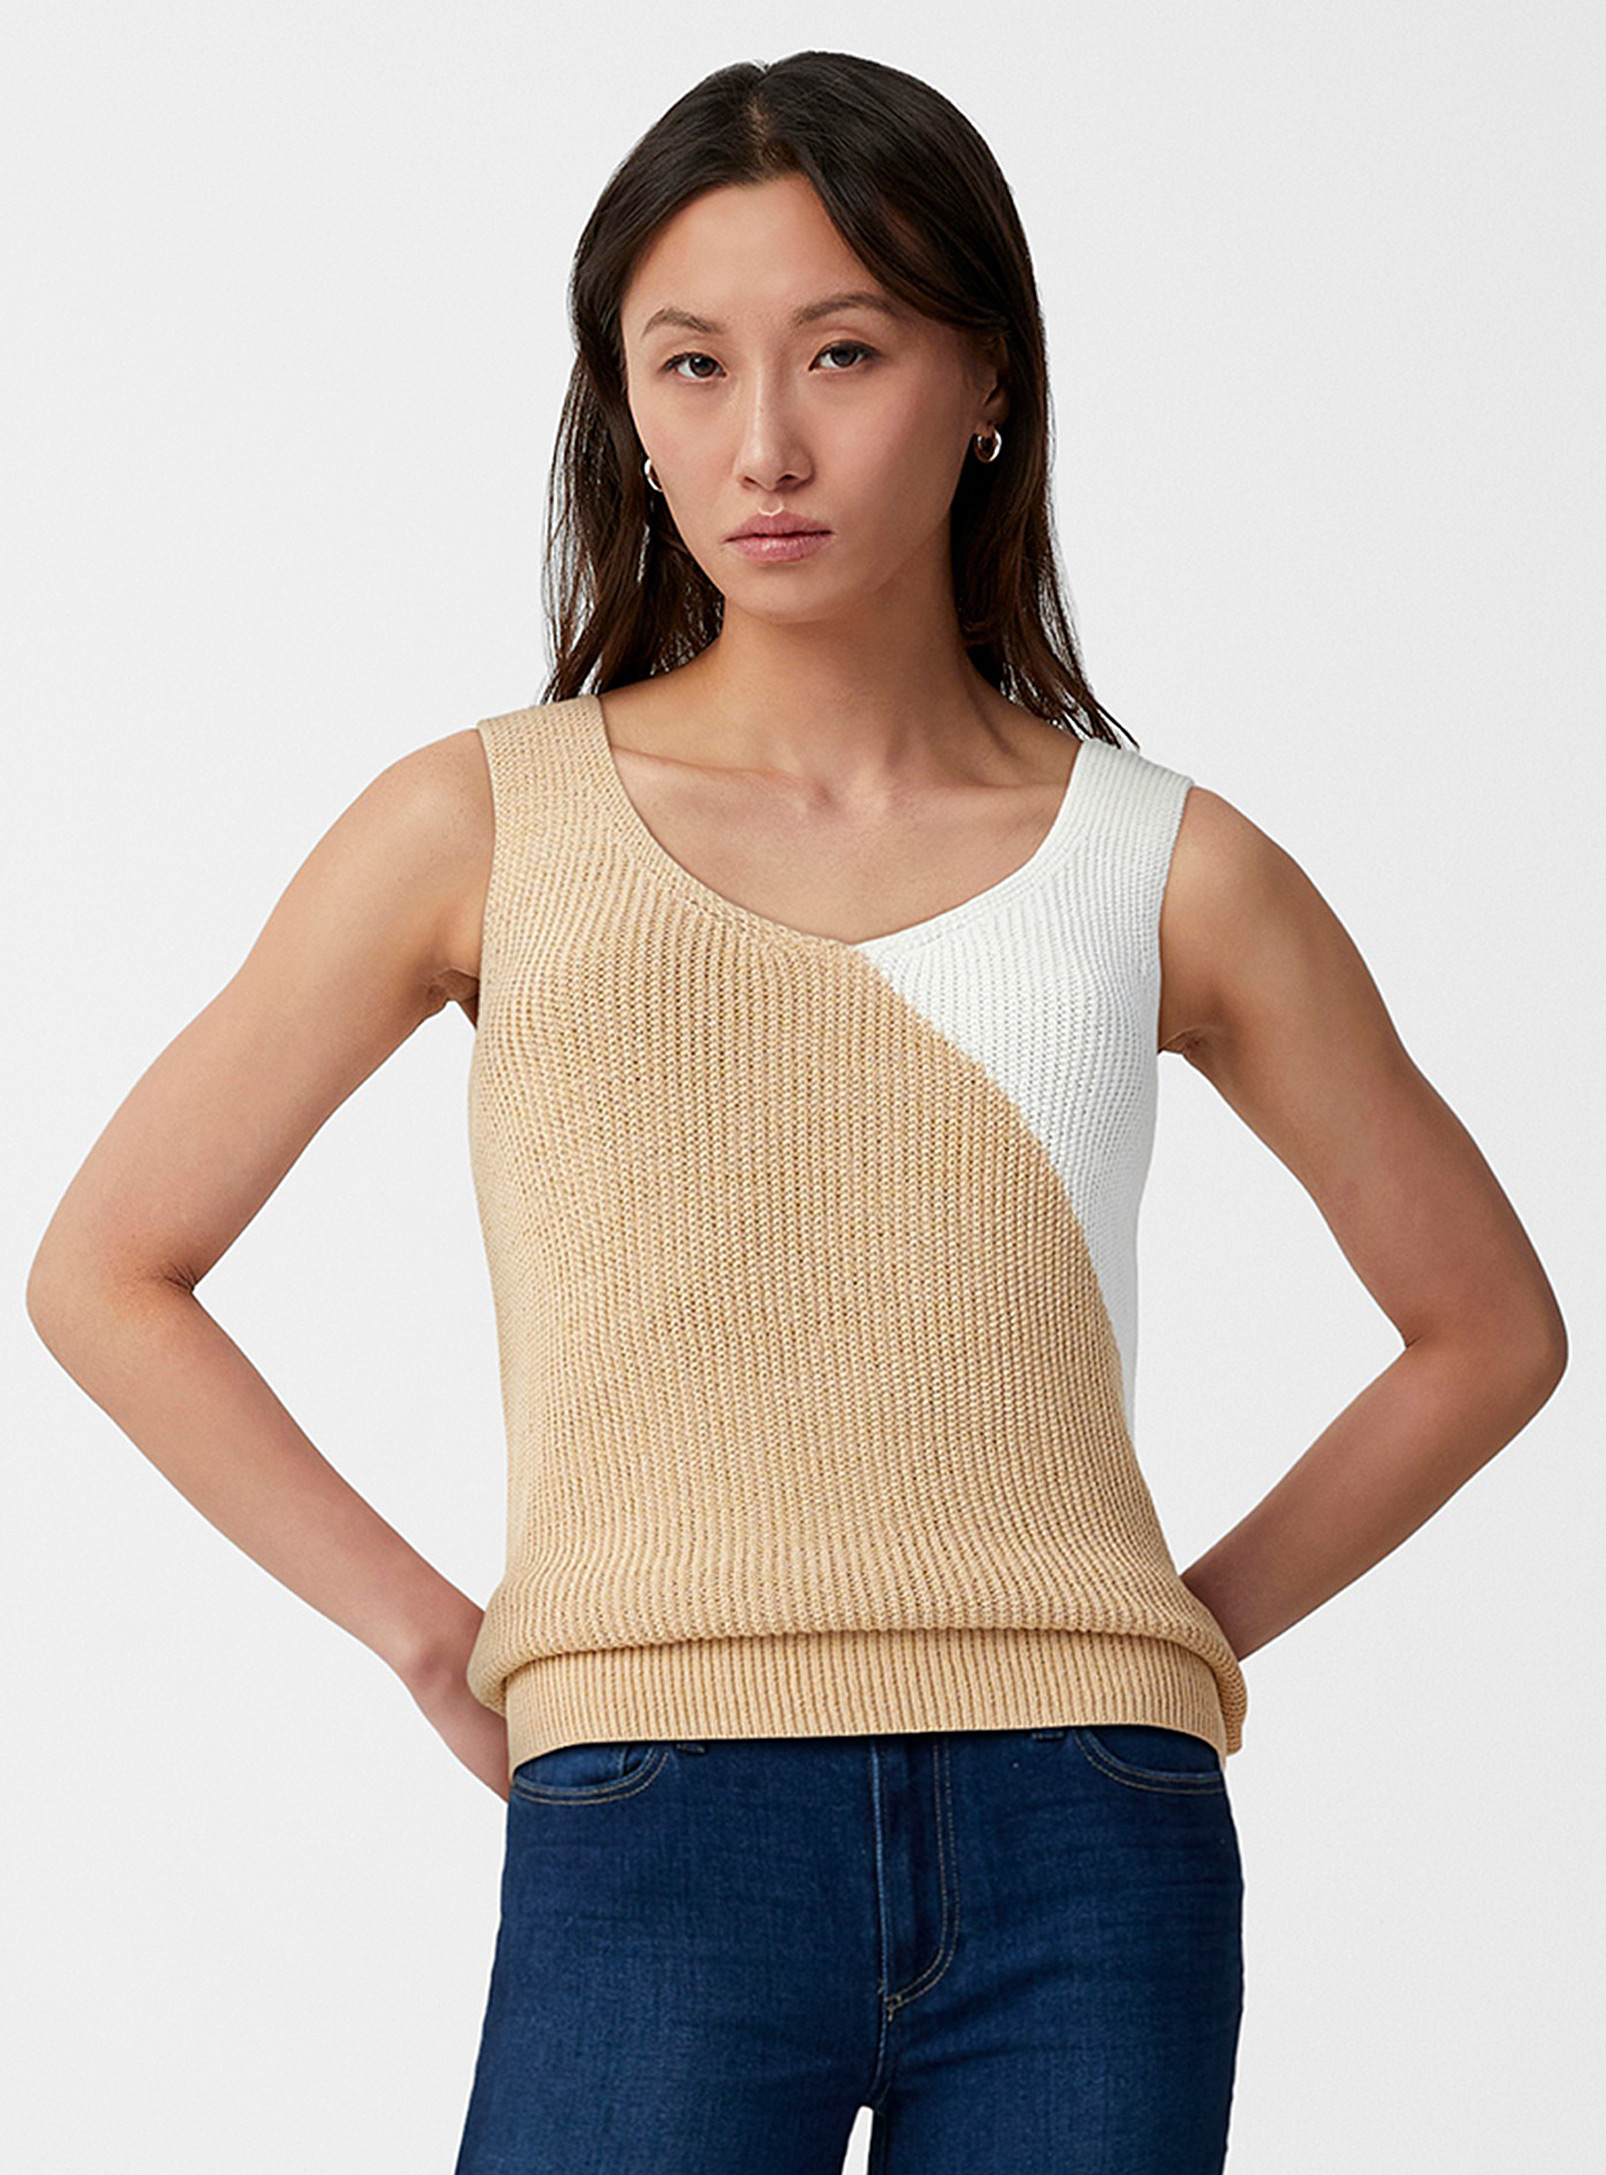 Contemporaine - Women's Two-tone blocks knit Cami Top